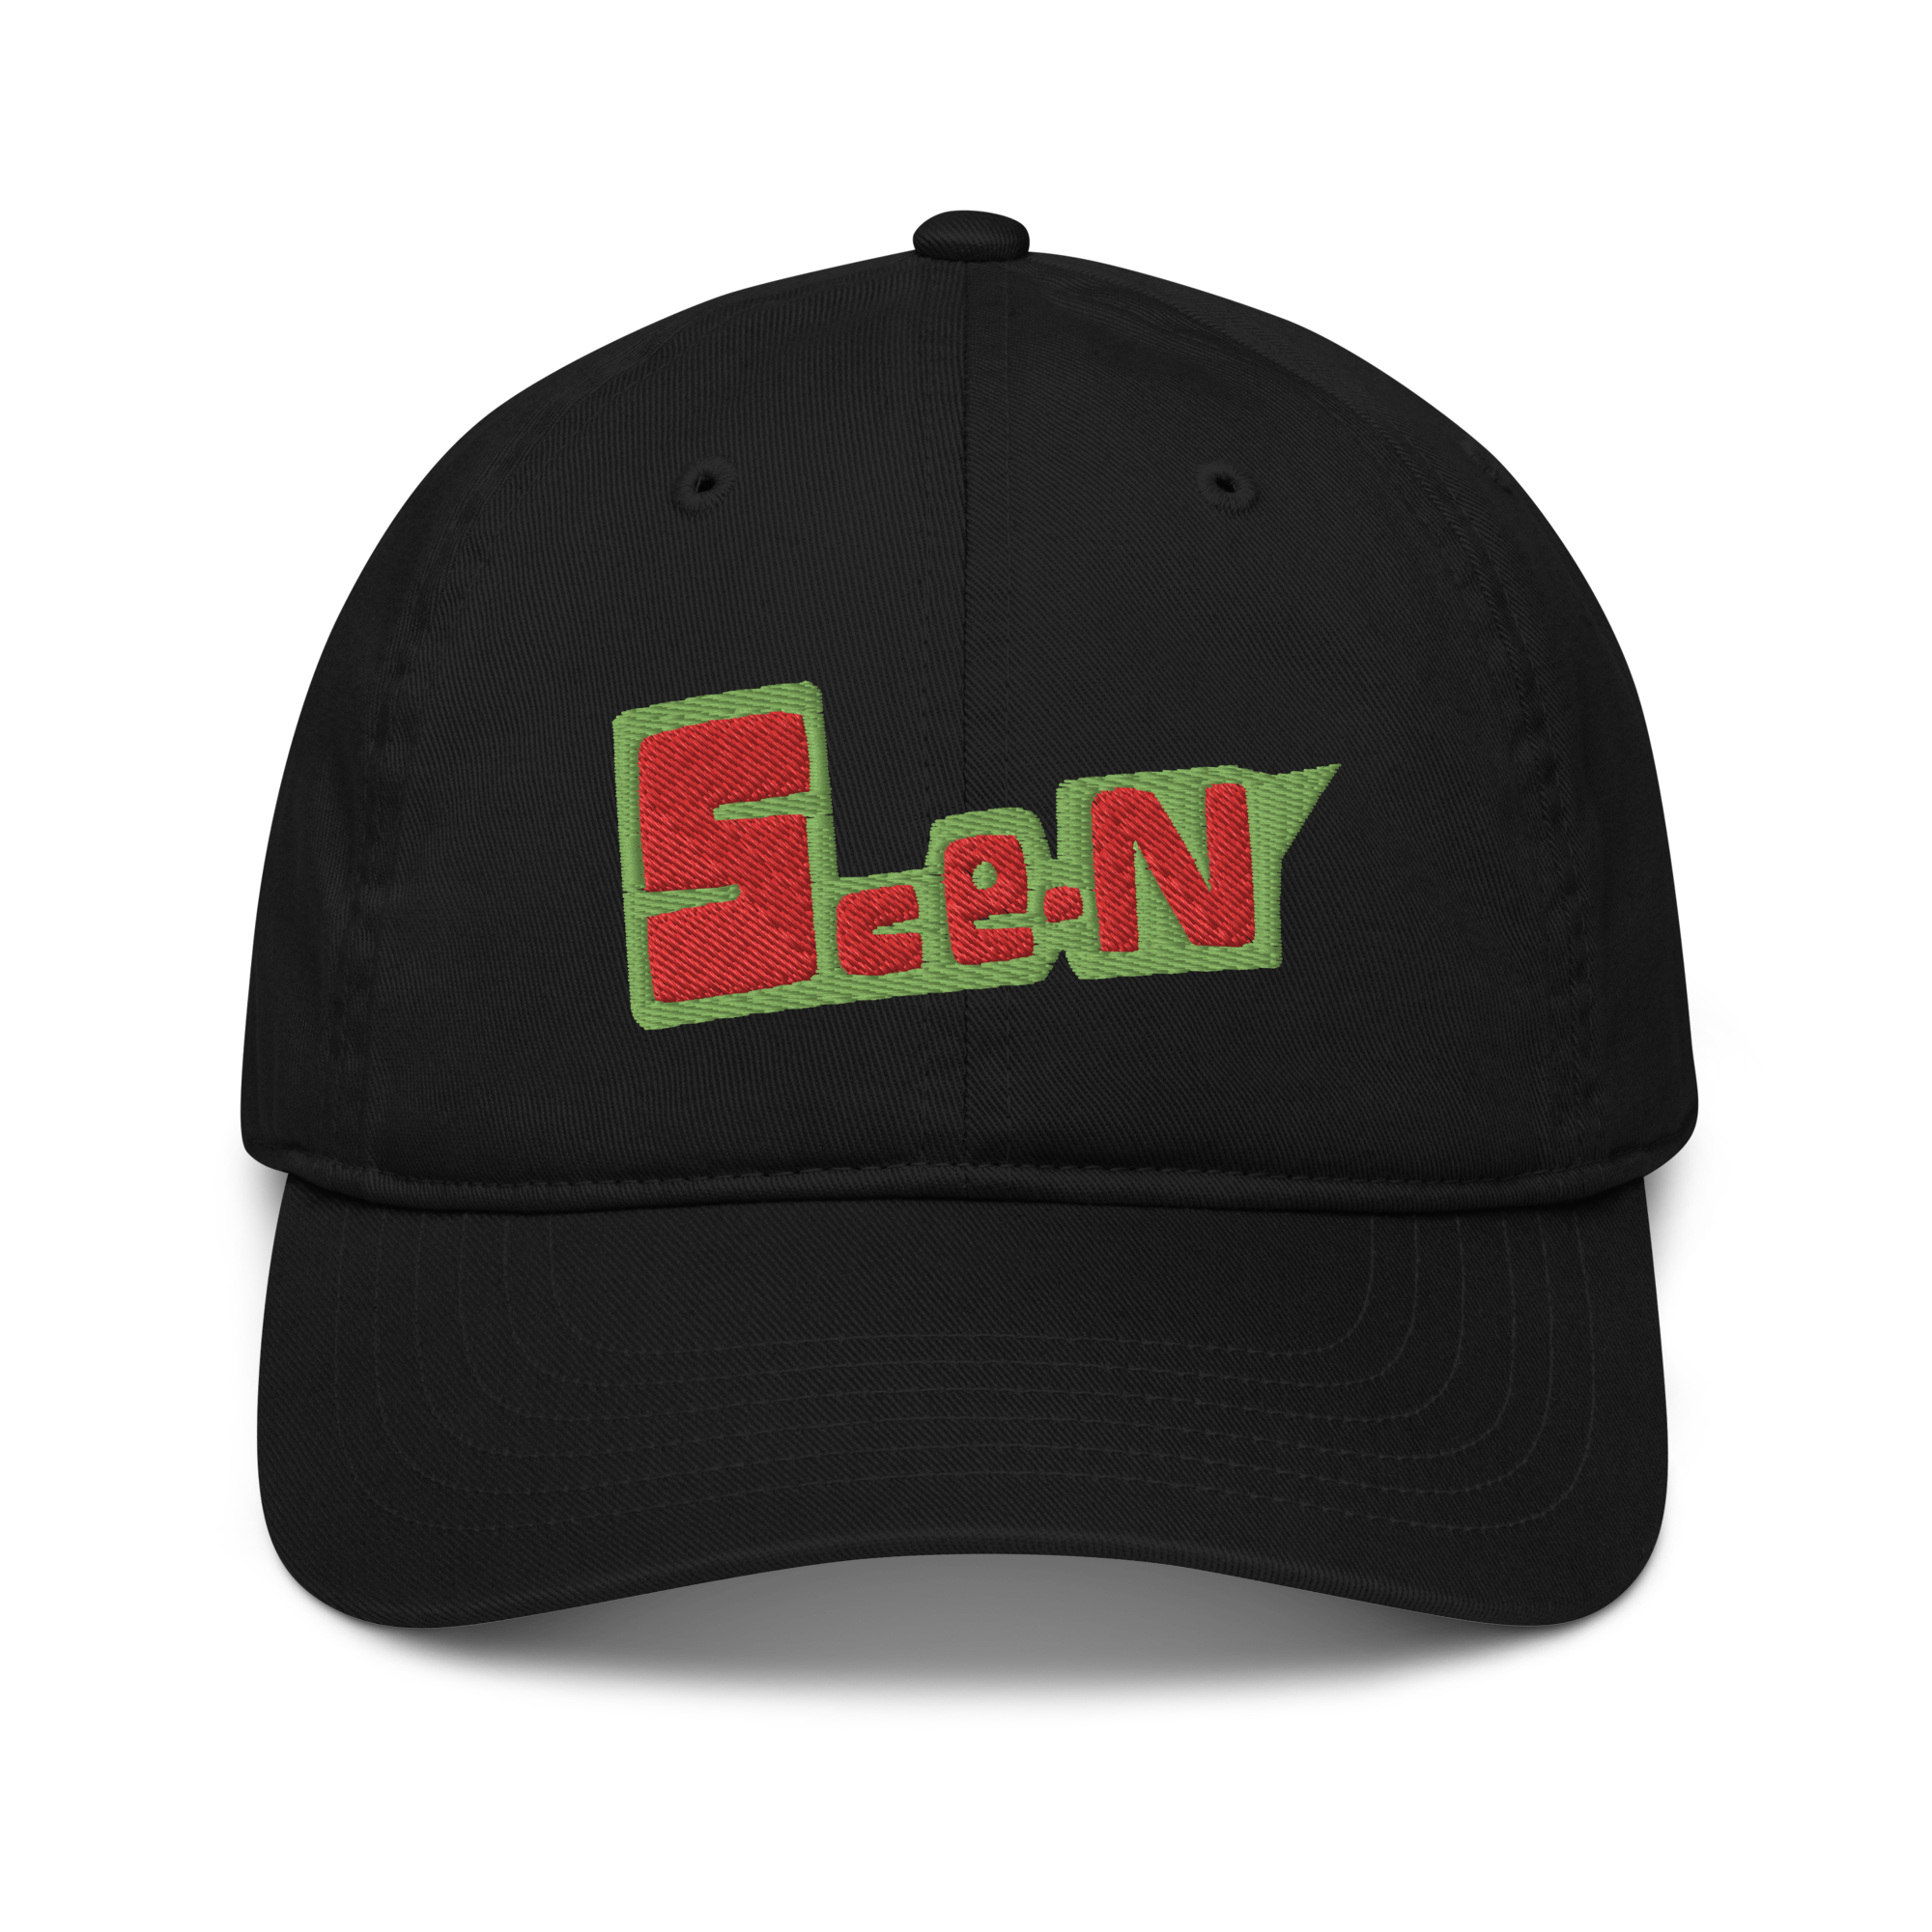 SCE-N HAT